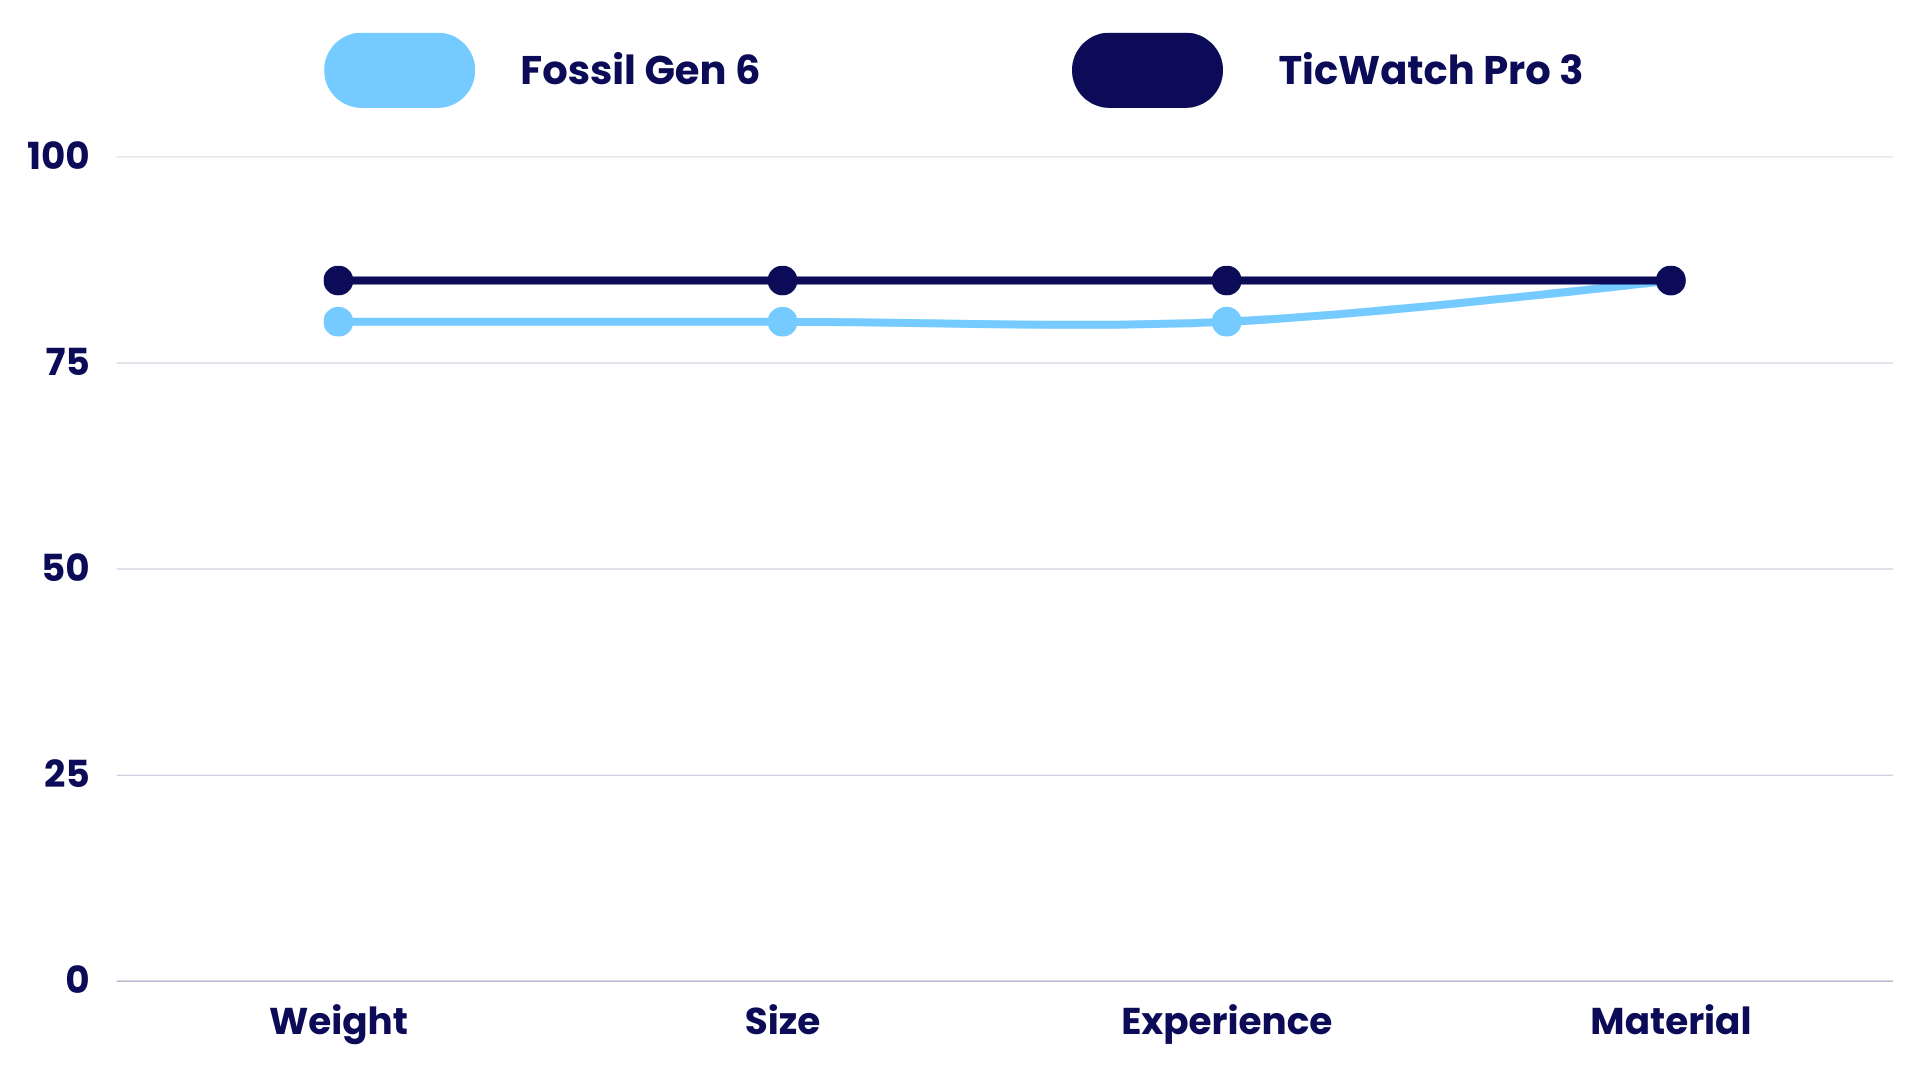 Body Comparison of Fossil Gen 6 vs TicWatch Pro 3